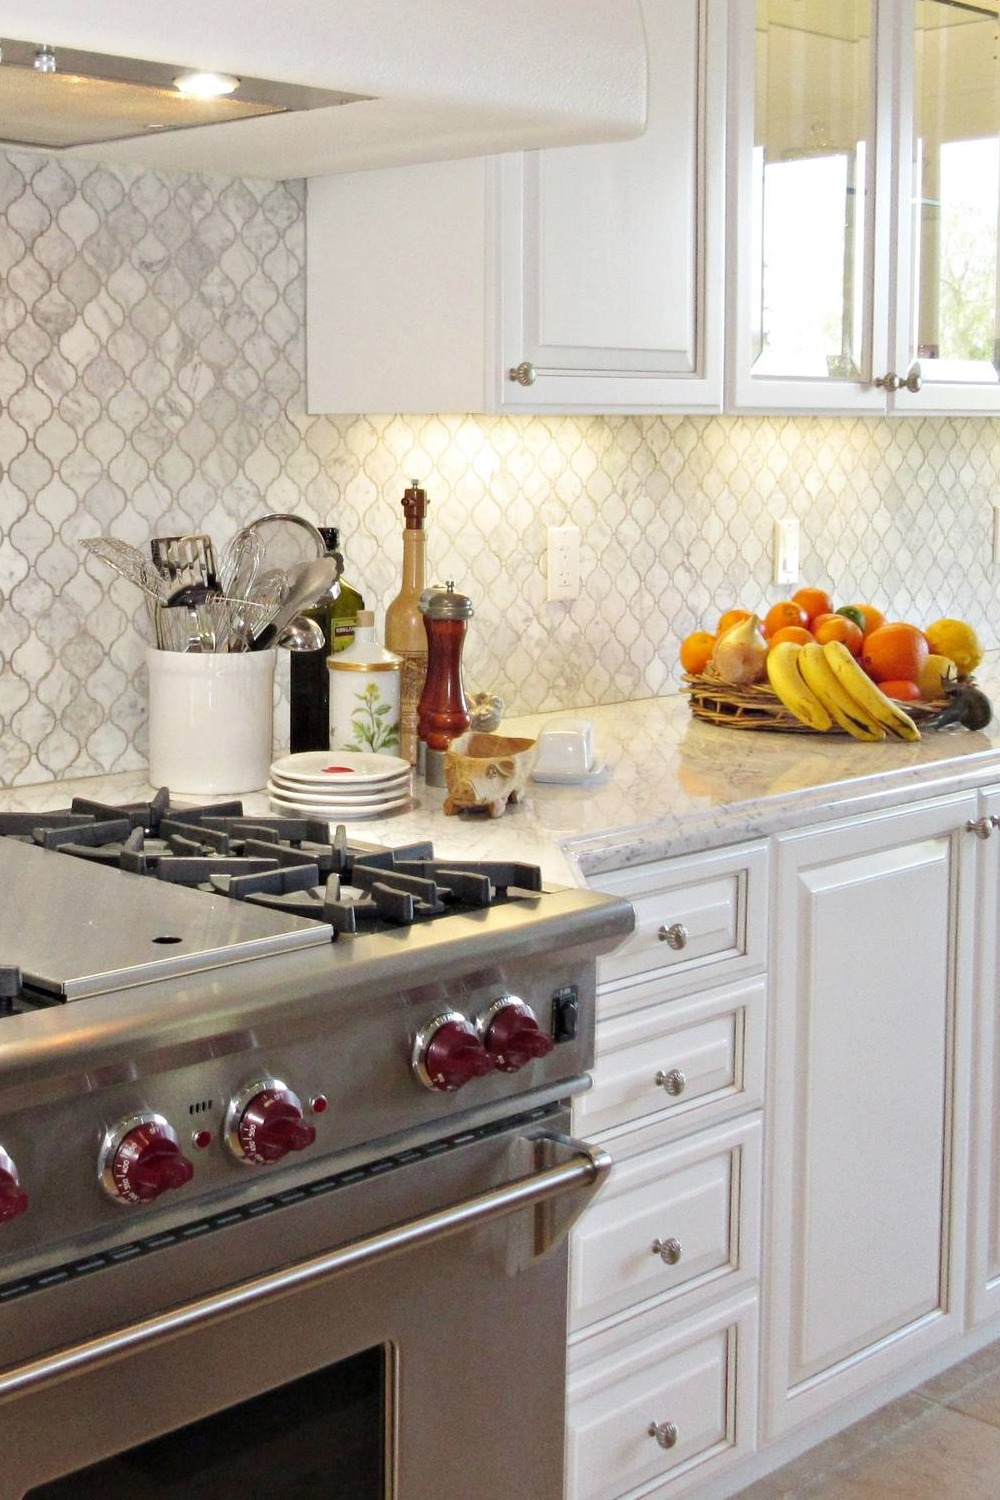 White Arabesque Tile White Kitchen Cabinets White Stone Countertops Grey Appliances Shaped